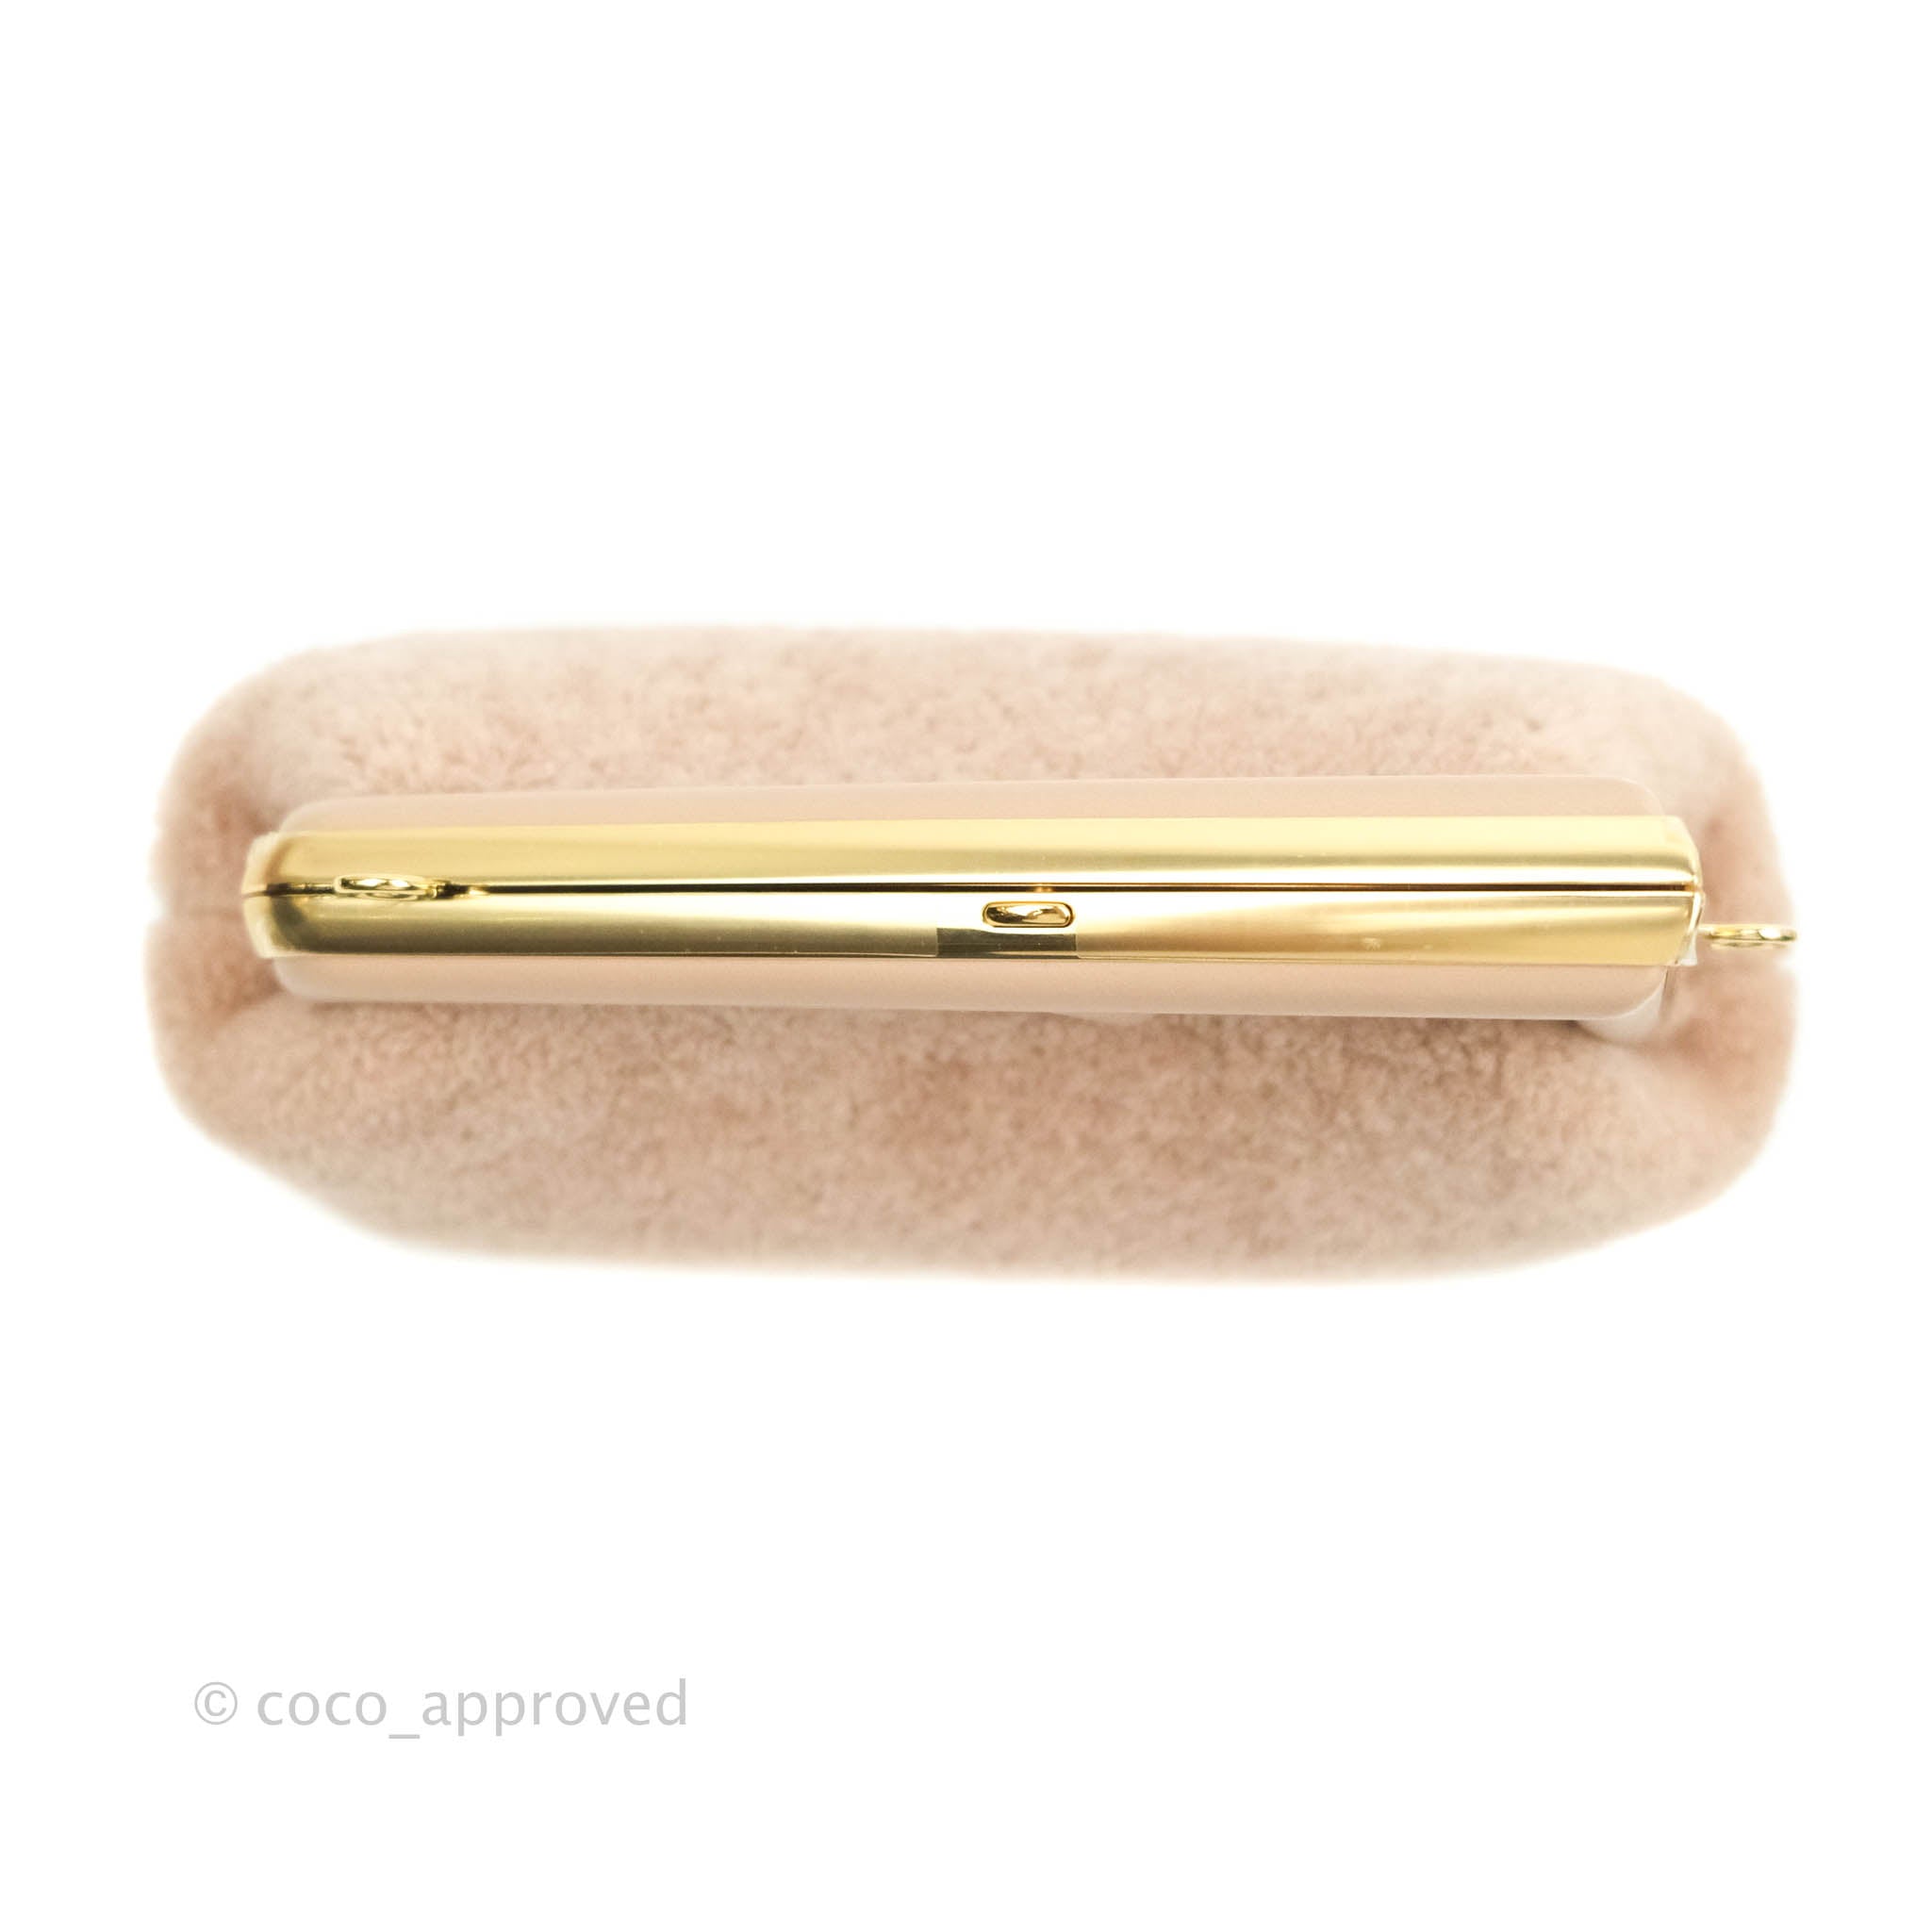 Fendi Small First Bag Pale Pink Merino Shearling Gold Hardware